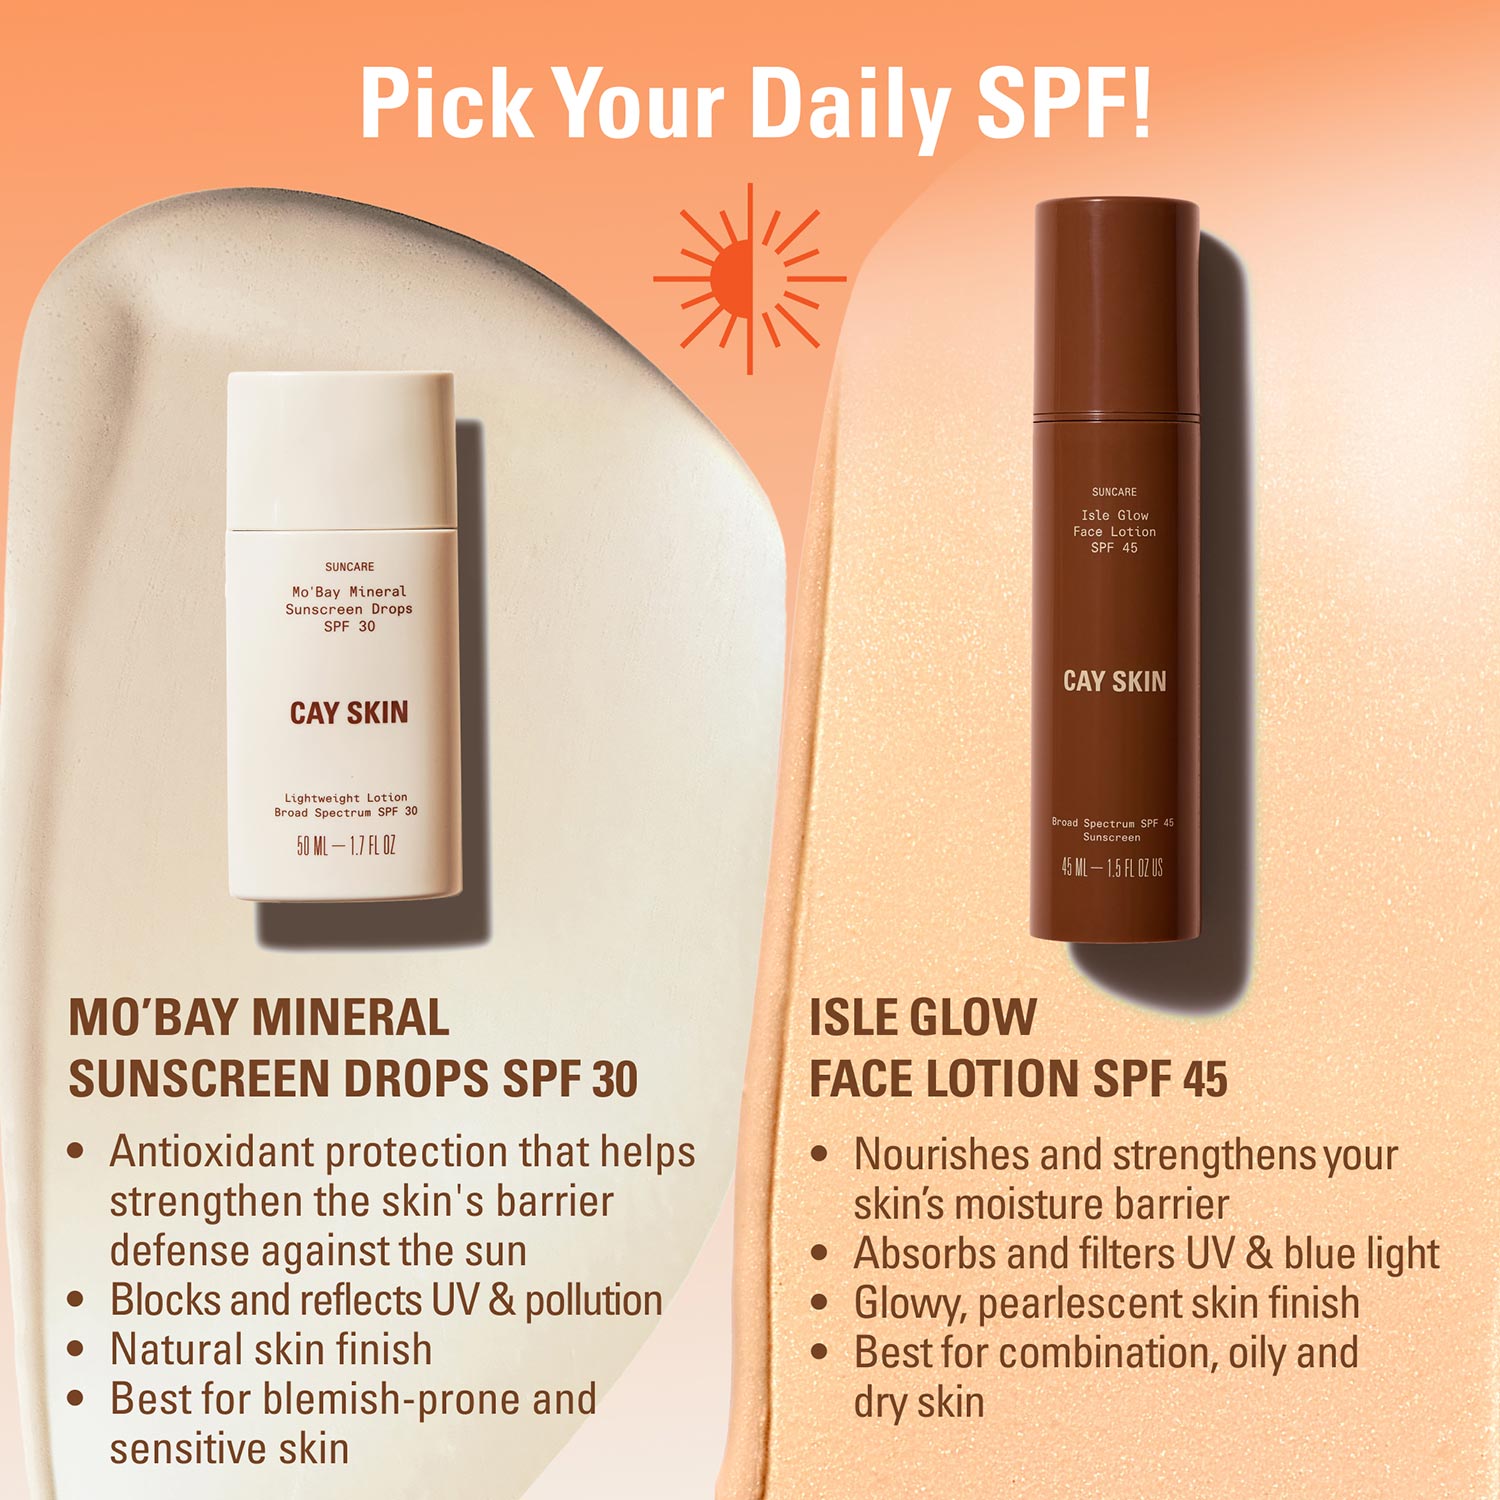 Mo'Bay Mineral Sunscreen SPF 30